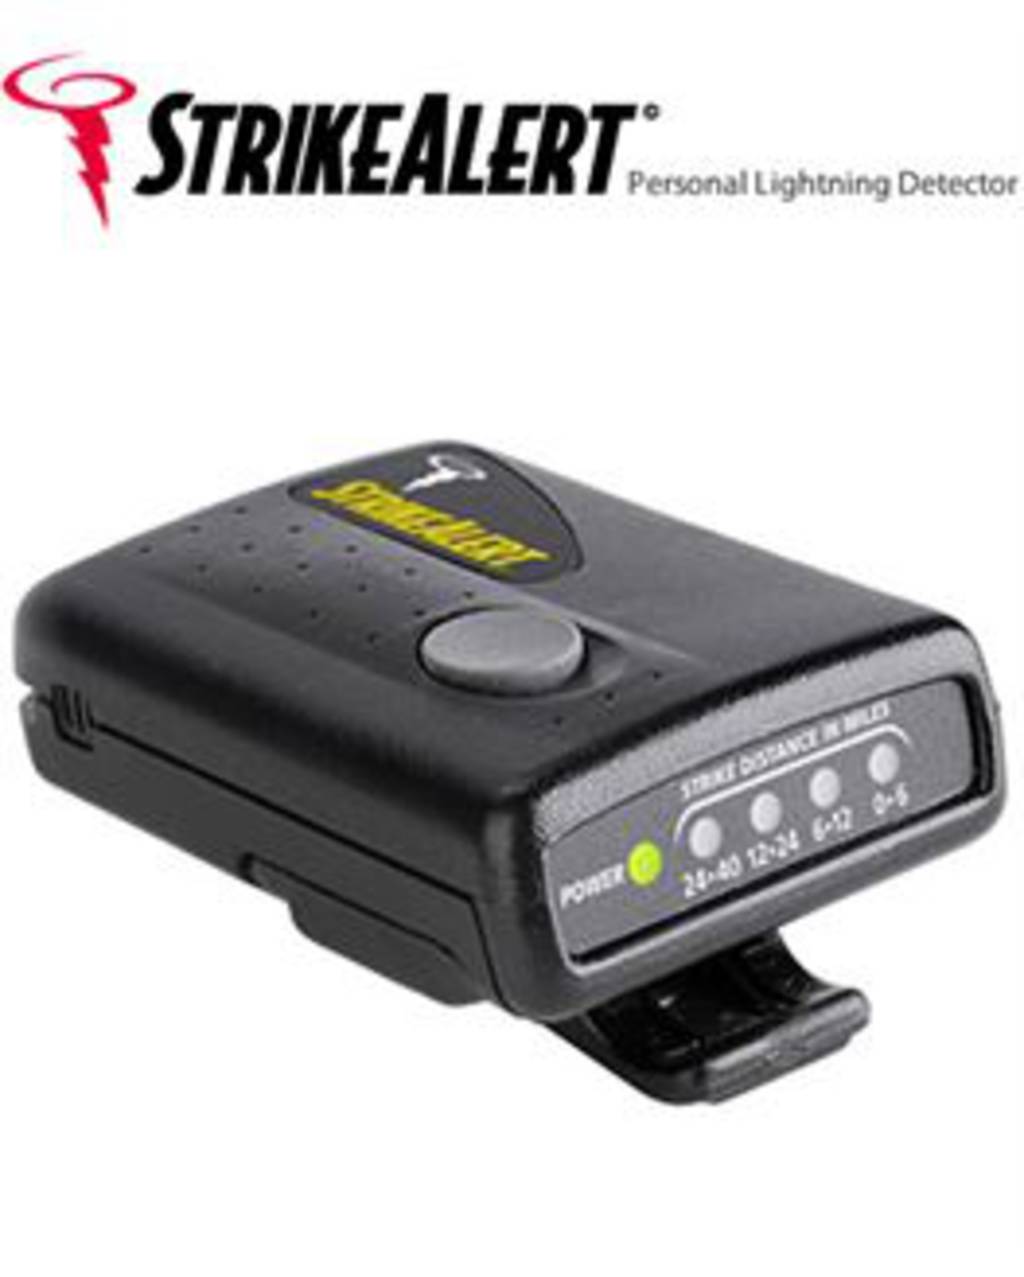 Strike Alert - Personal Lightning Detector